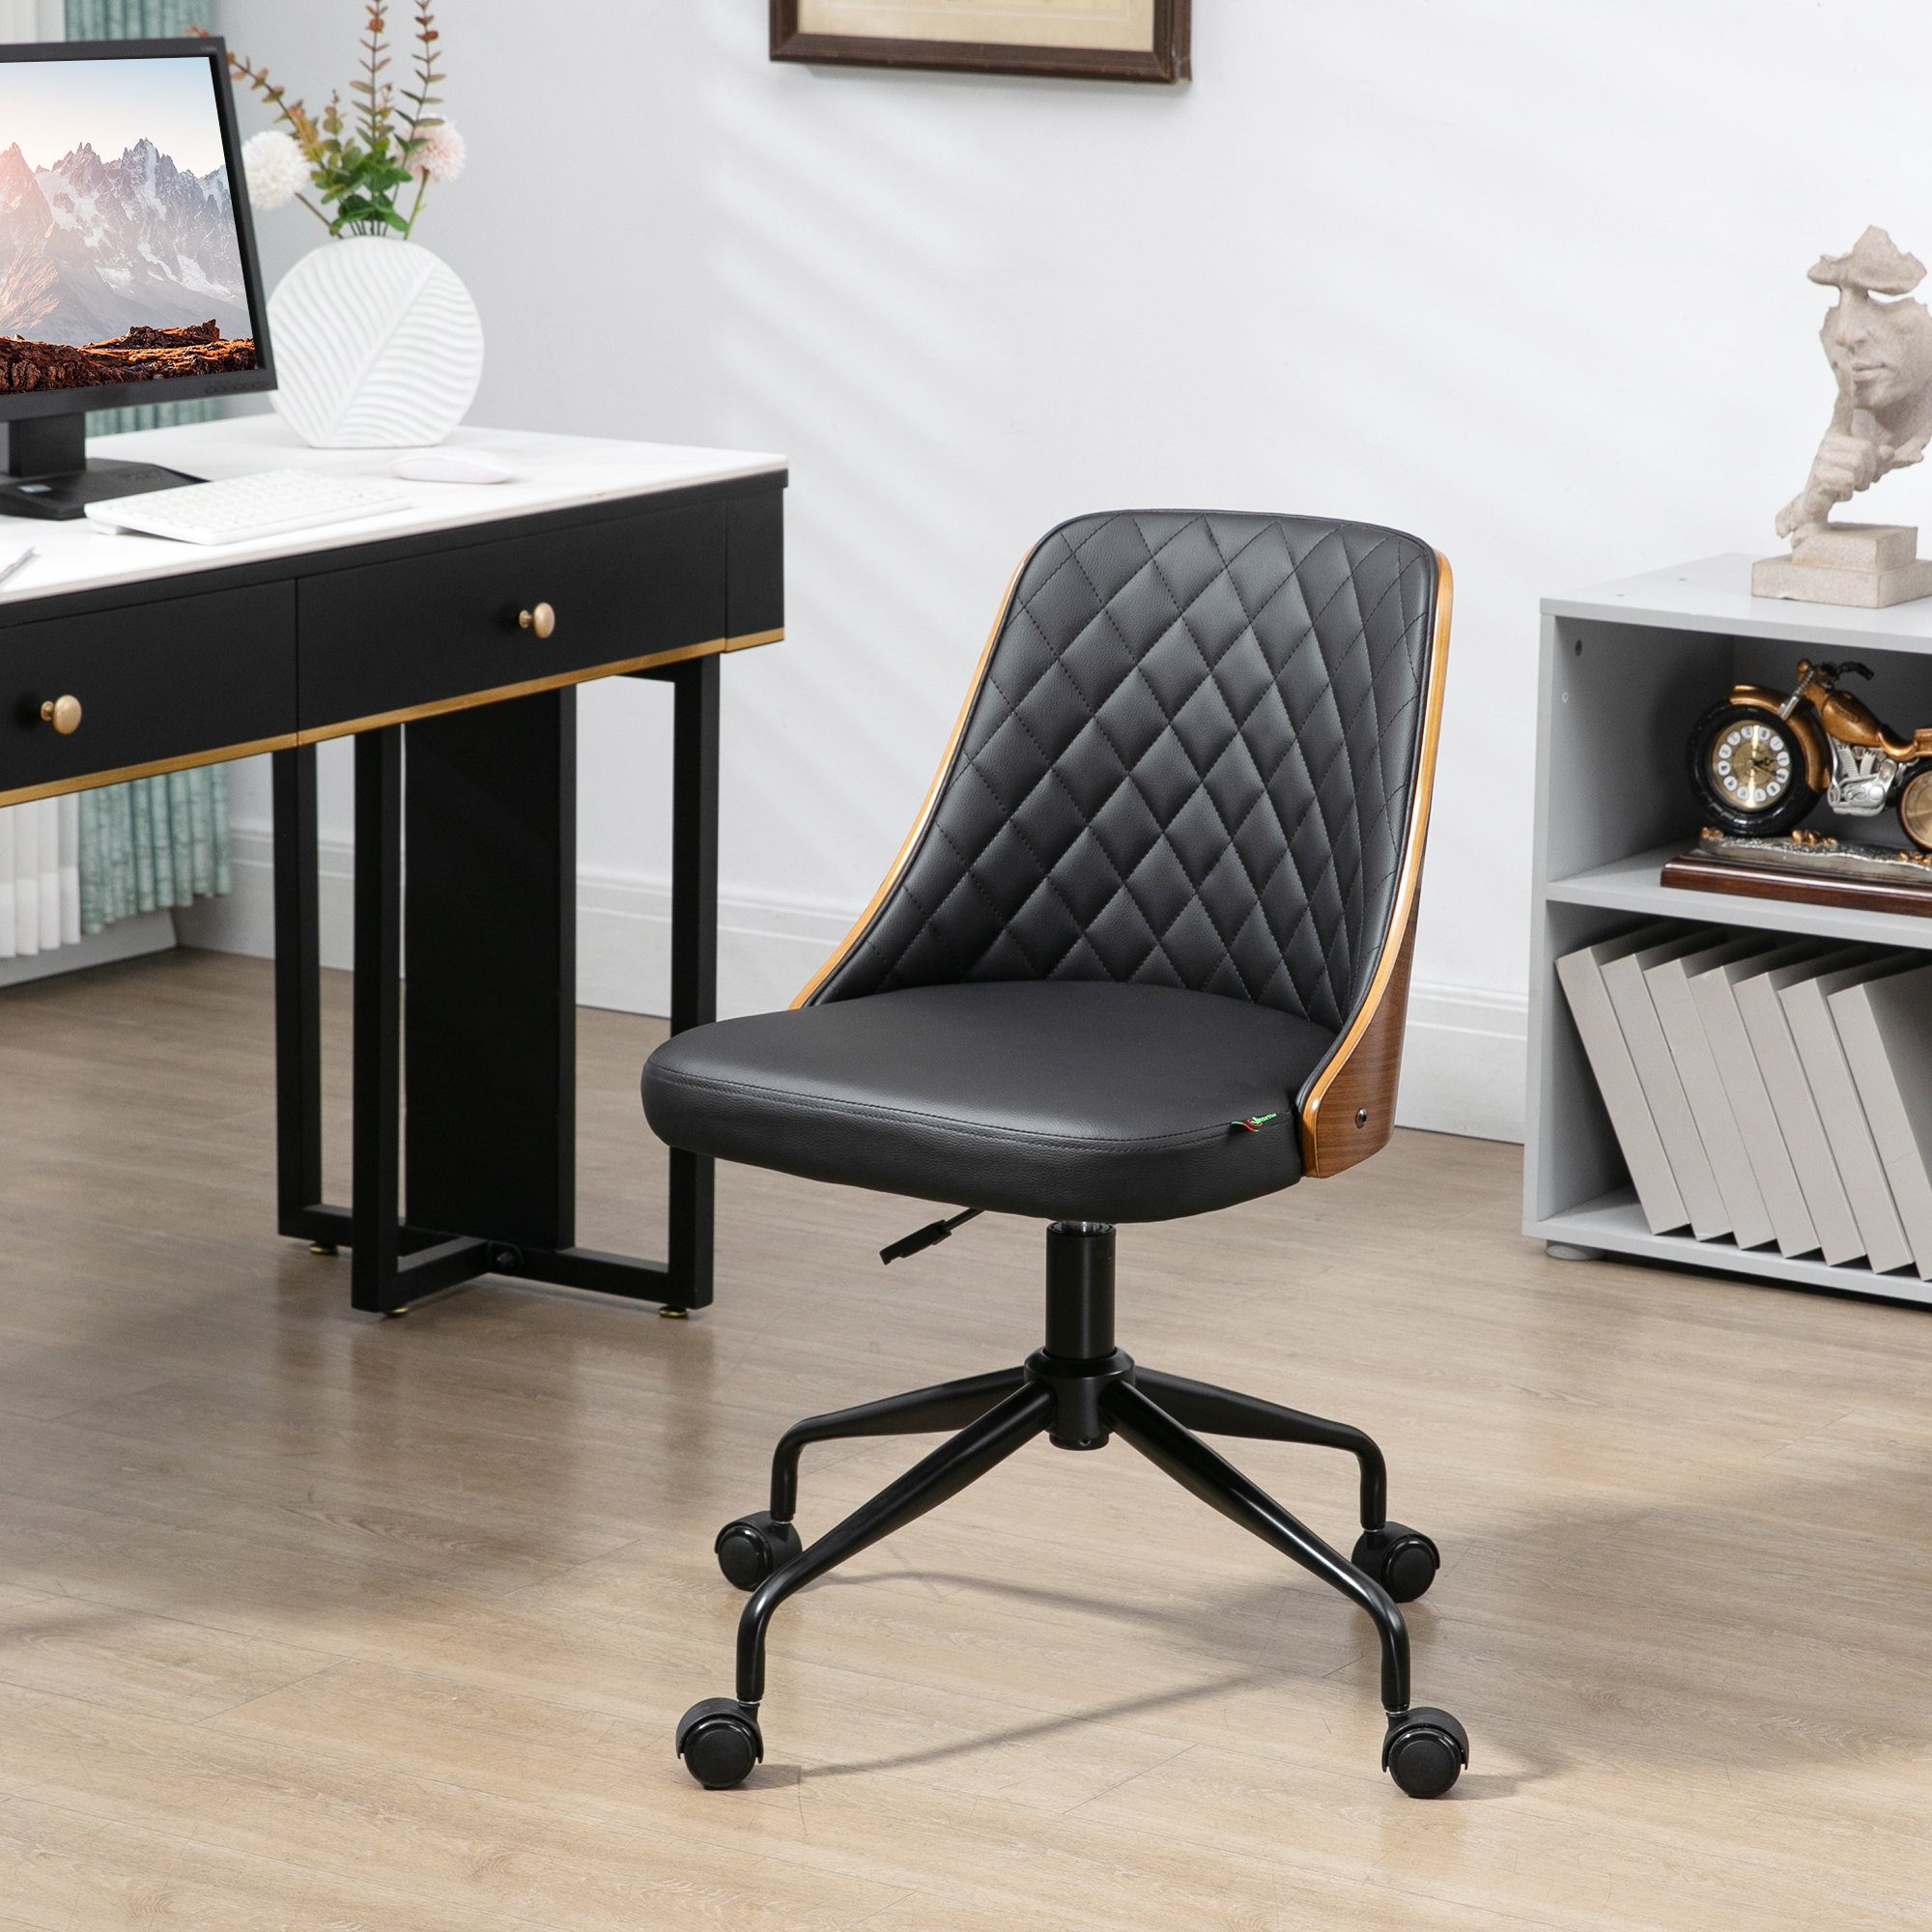 höhenverstellbarer Drehstuhl Bürostuhl Schreibtischstuhl Bürostuhl (Set, Schwarz St), ergonomisch 1 Vinsetto